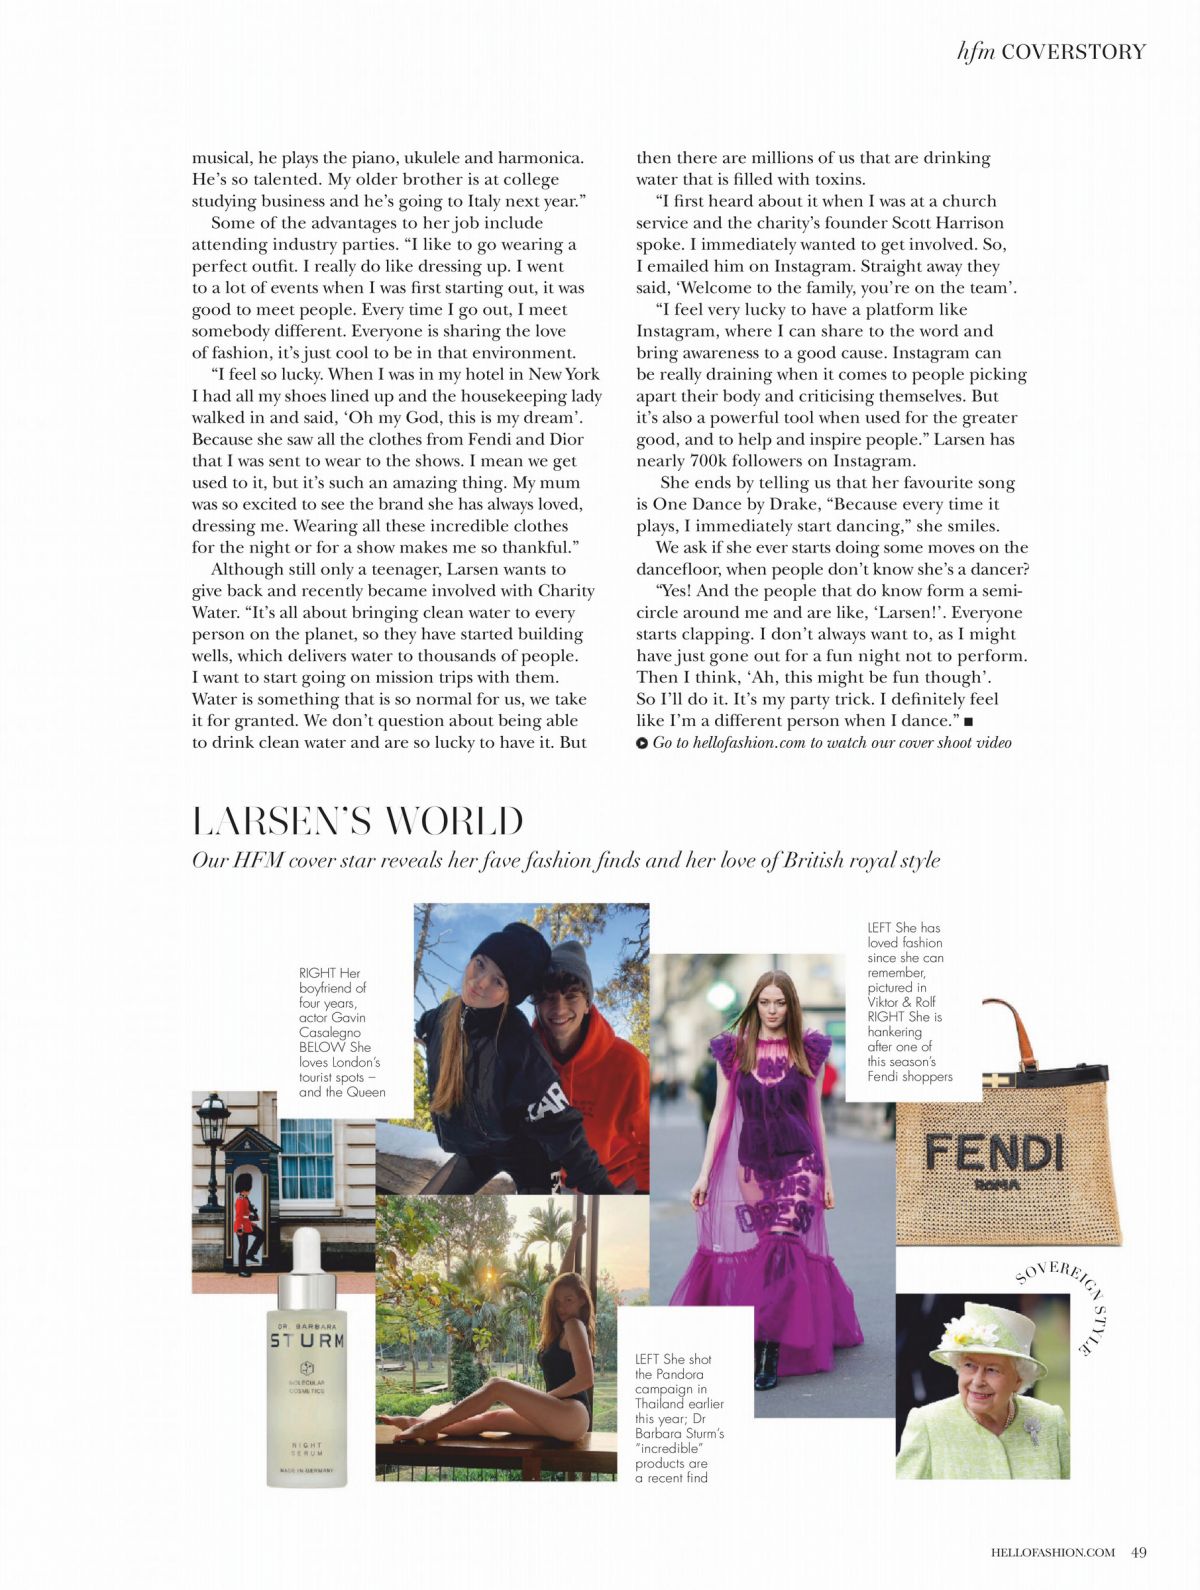 Larsen Thompson in Hello! Fashion Magazine, Summer 2020 Issue